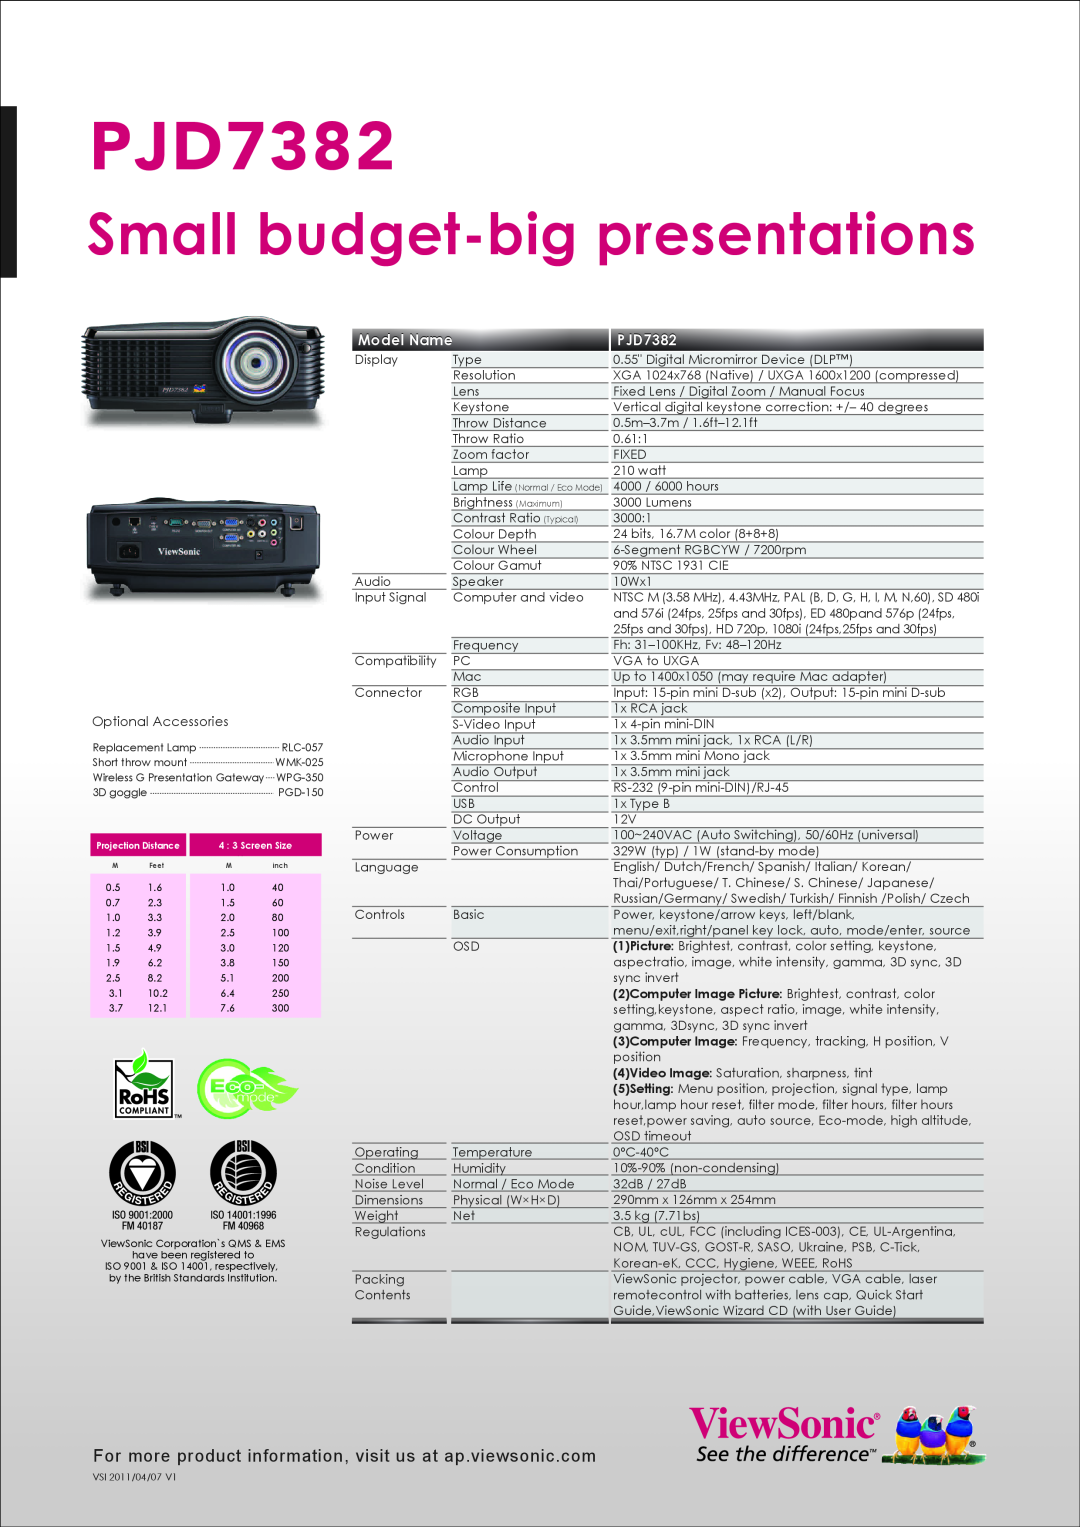 ViewSonic VS13338 warranty PJD7382, Small budget-bigpresentations, Model Name, Optional Accessories 